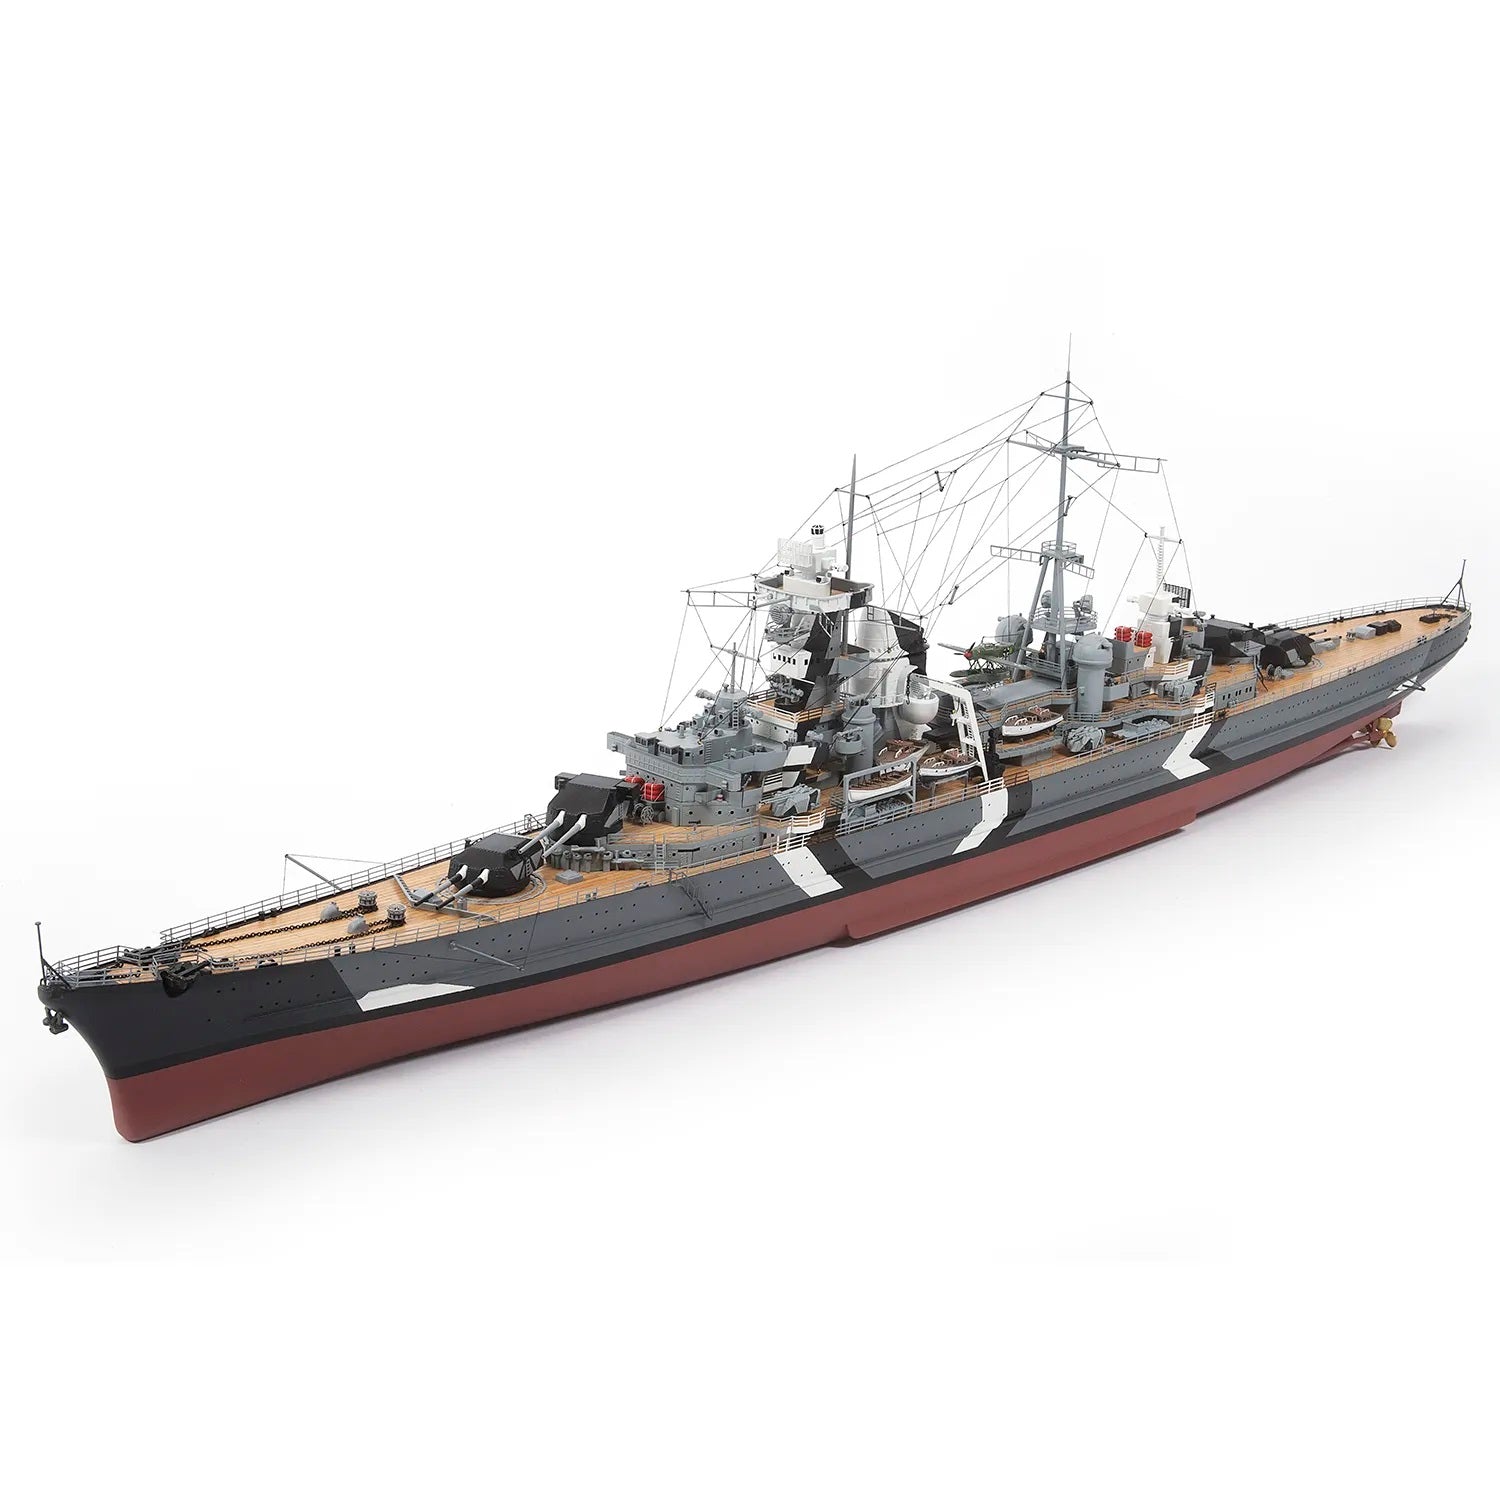 OcCre 'Prinz Eugen' Admiral Hipper Class Cruiser Wooden Model Ship Kit, 1/200 Scale